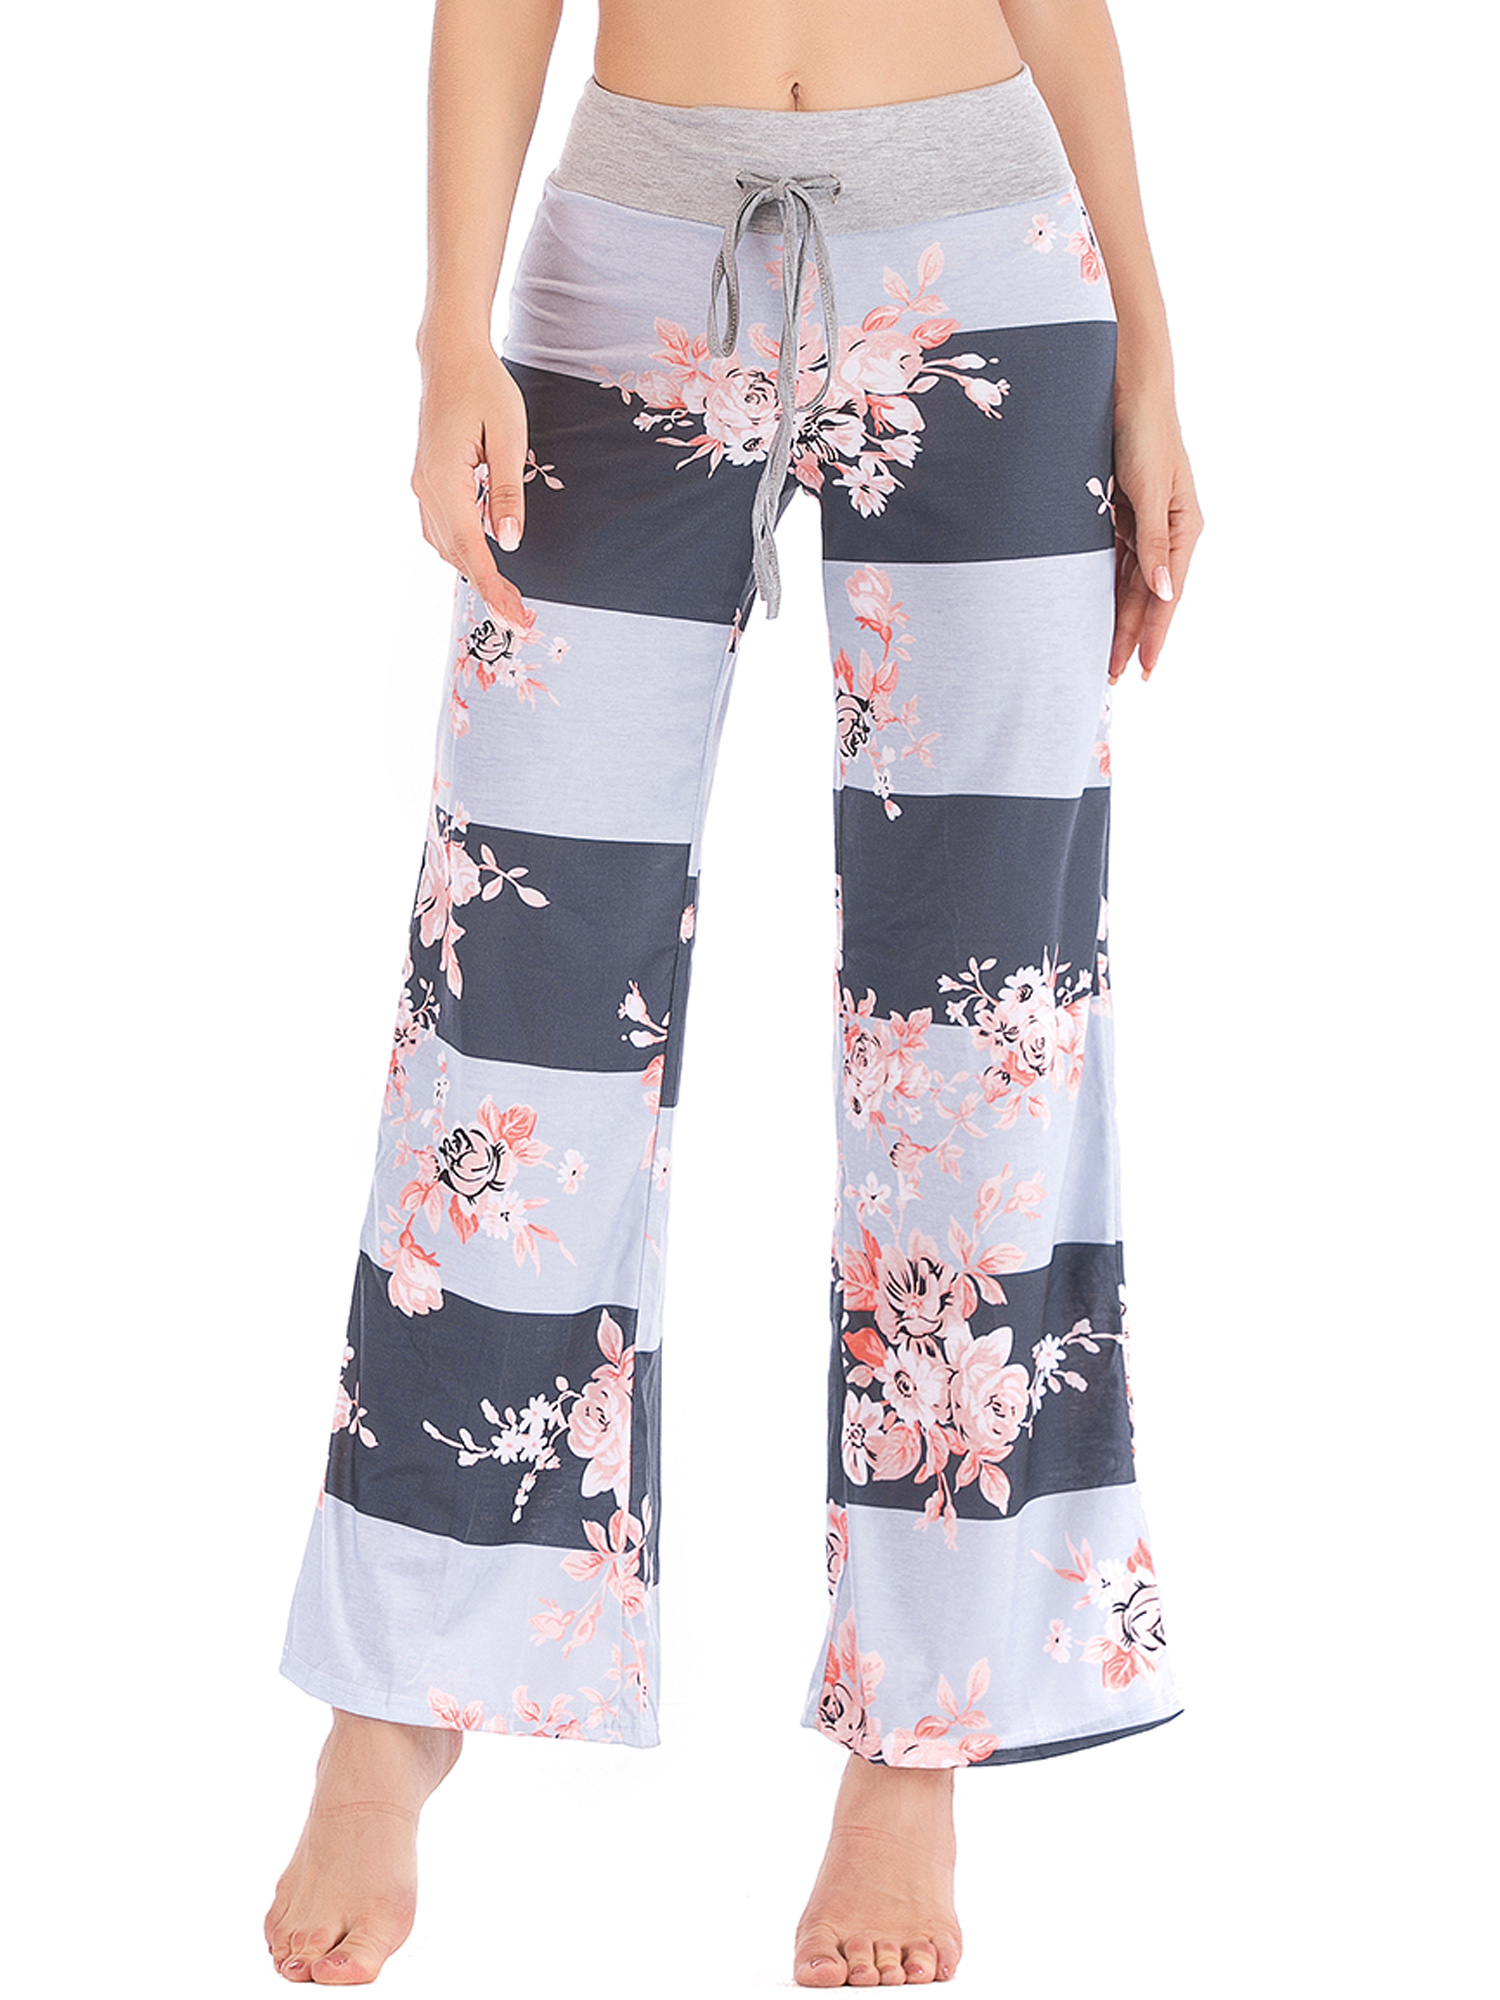 ZERDOCEAN Women/'s Plus Size Wide Leg Casual Lounge Pants Comfy Capris Relaxed Pajama Bottoms Drawstring Pockets